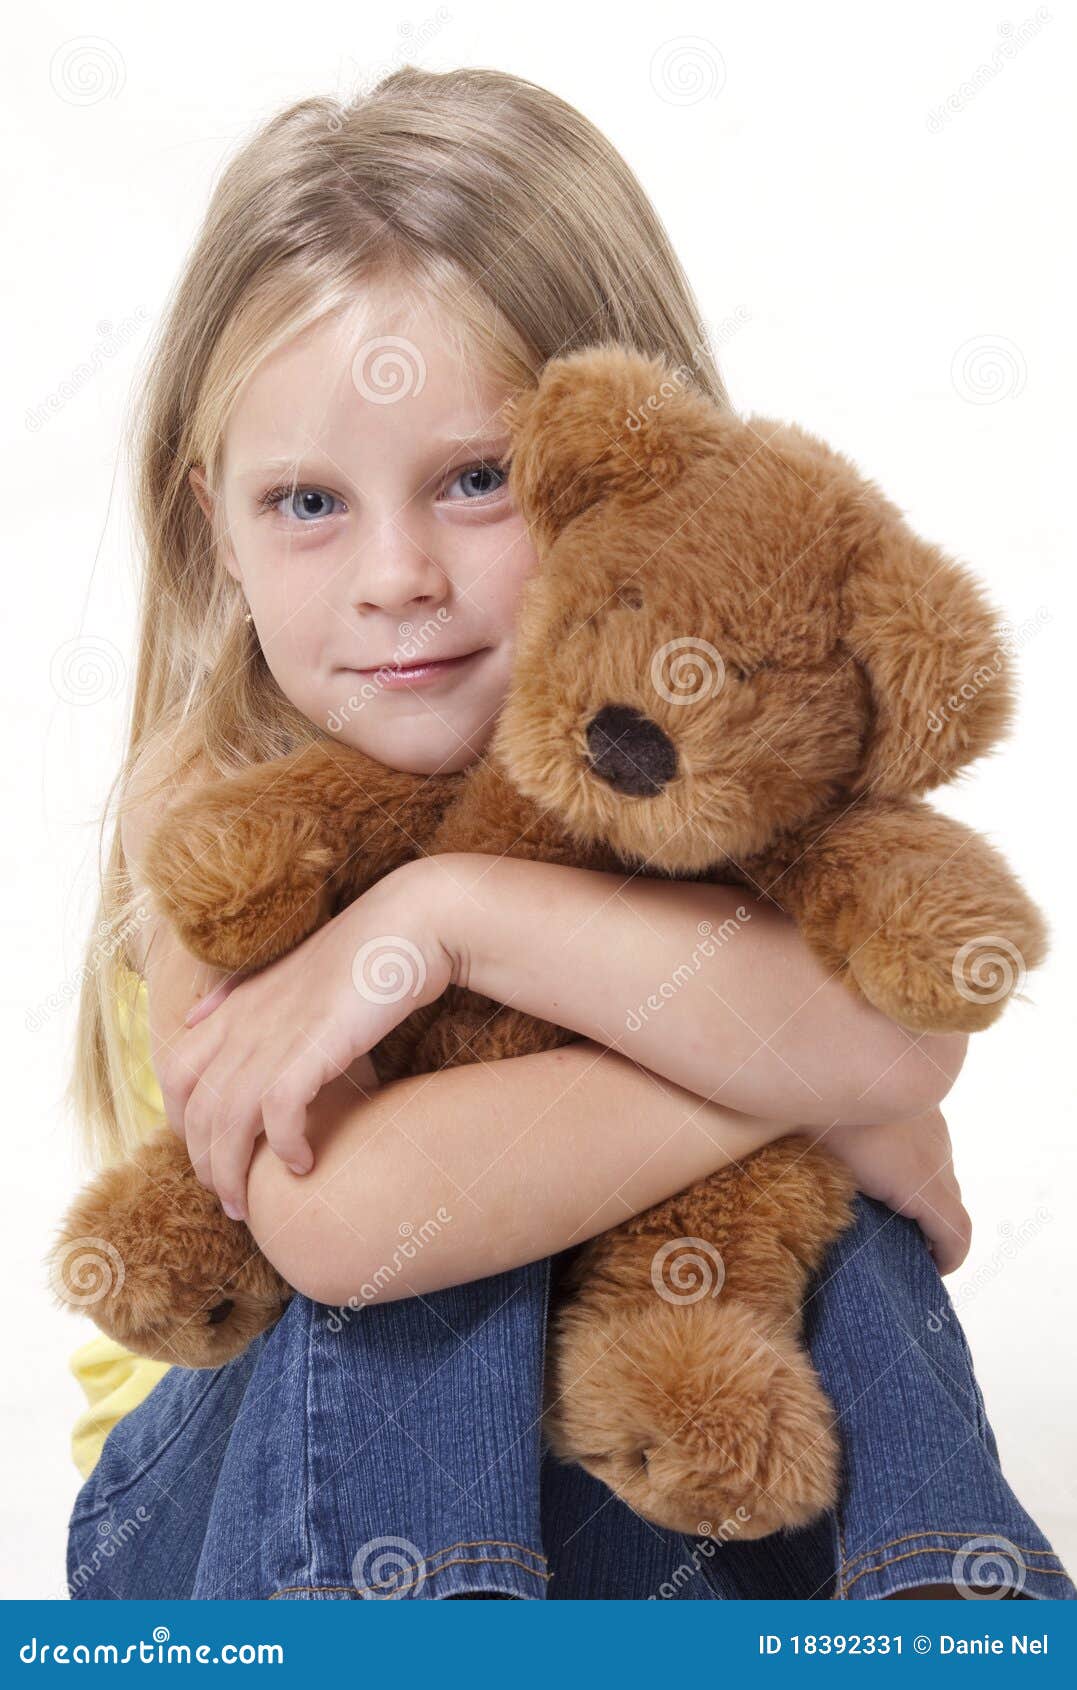 Teddy Bear Hug stock image. Image of plaything, cute - 18392331